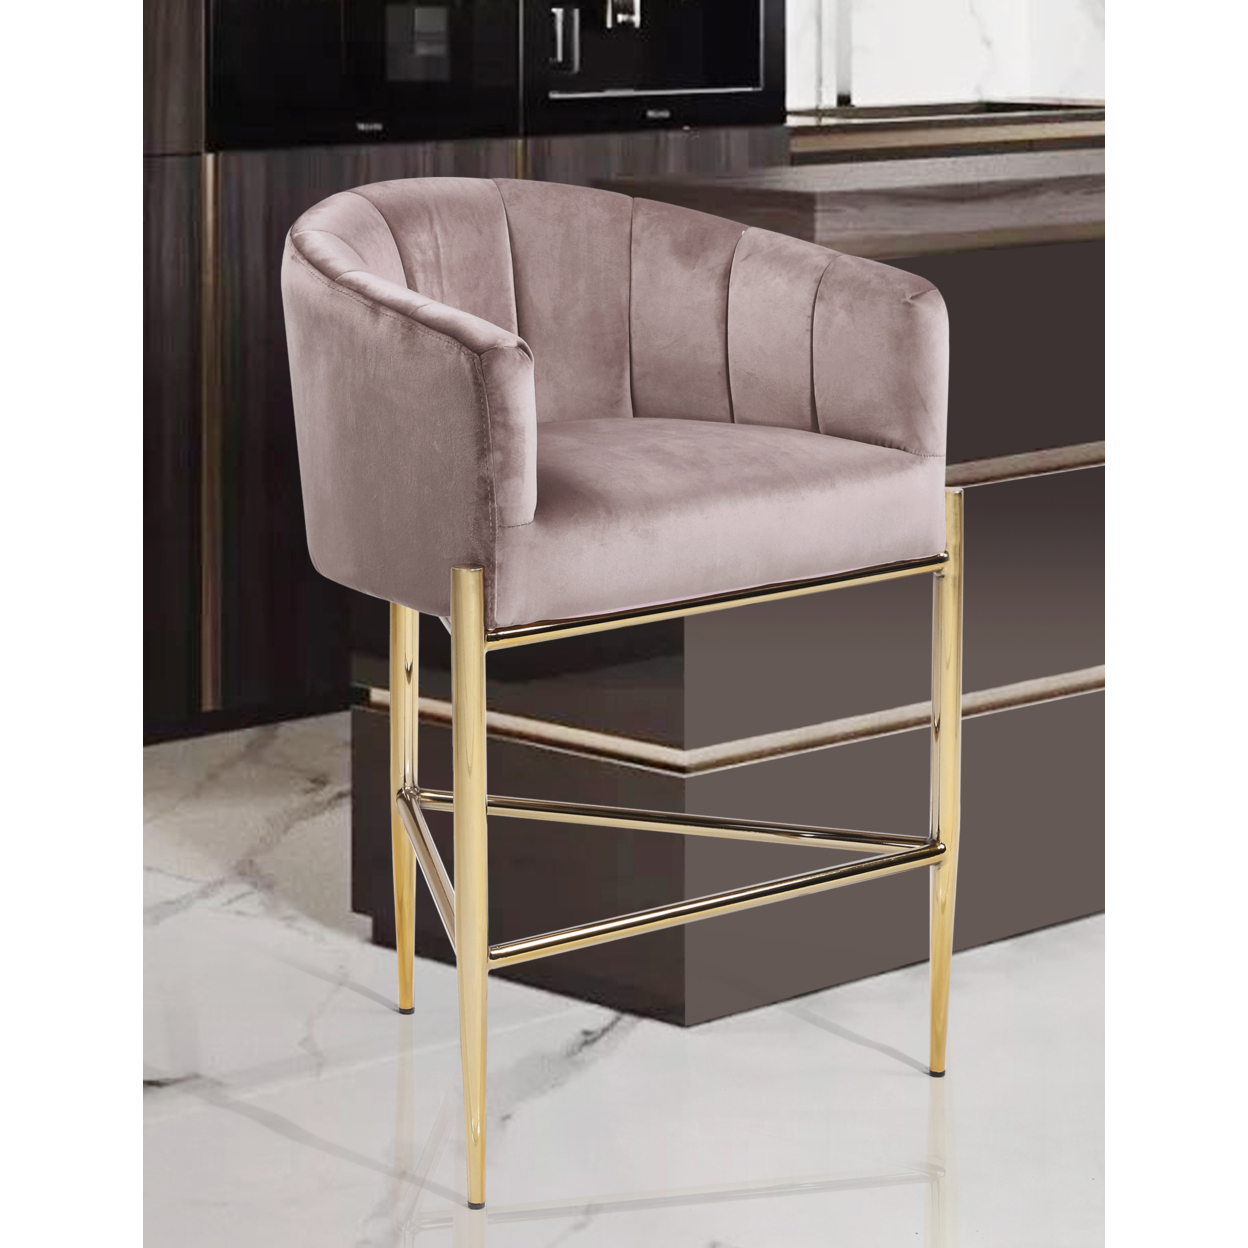 Iconic Home Ardee Counter Stool Chair Velvet Upholstered Shelter Arm Shell Design 3 Legged Gold Tone Solid Metal Base - Blush